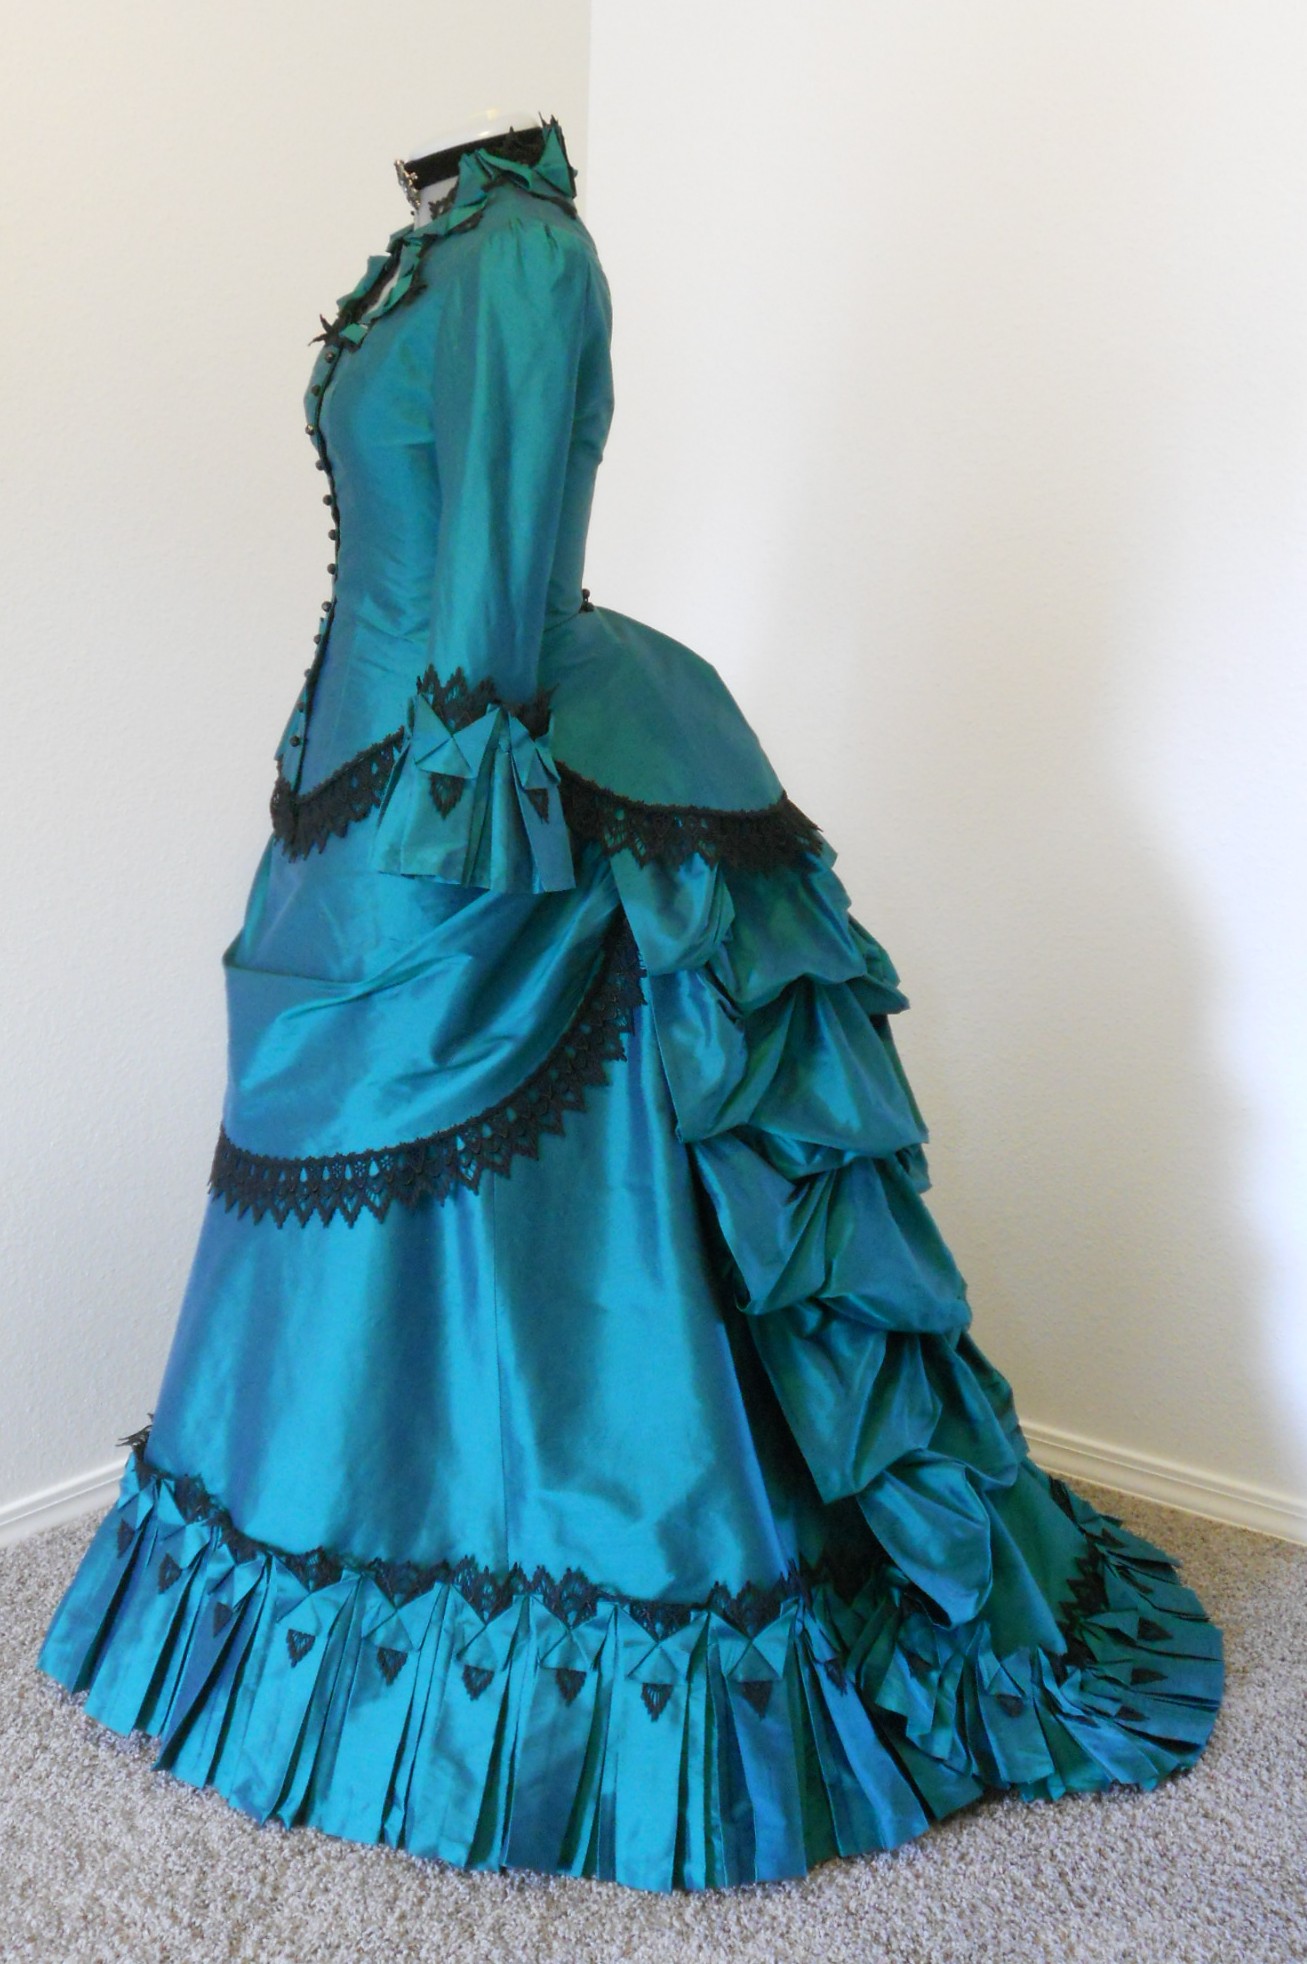 Victorian Dress Picture Collection | DressedUpGirl.com